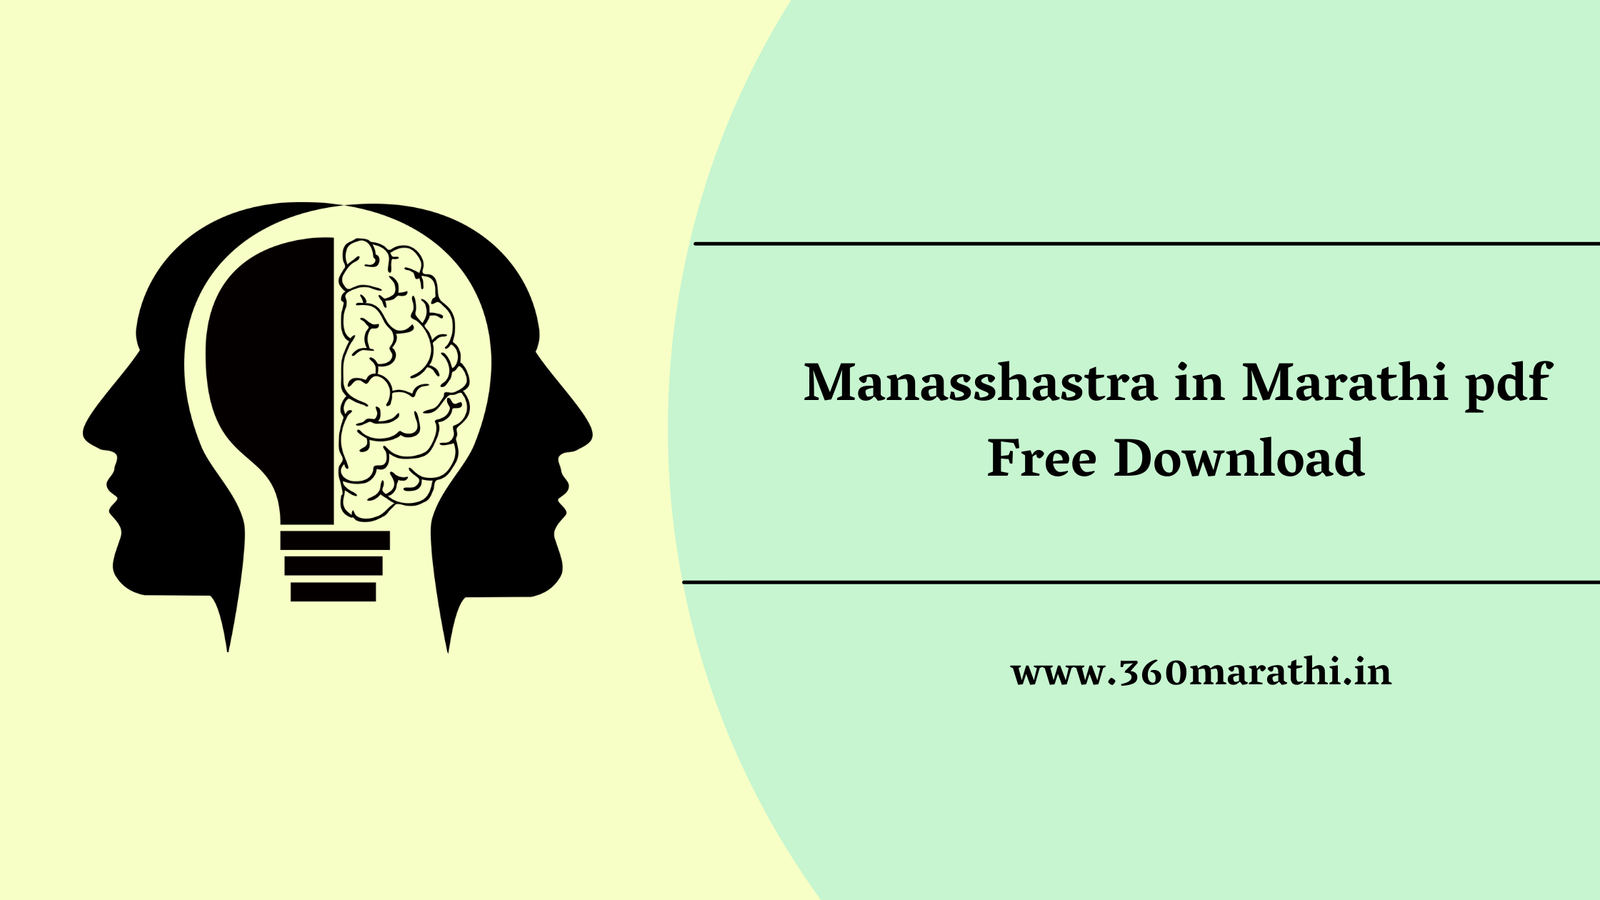 Manasshastra in Marathi pdf Free Download